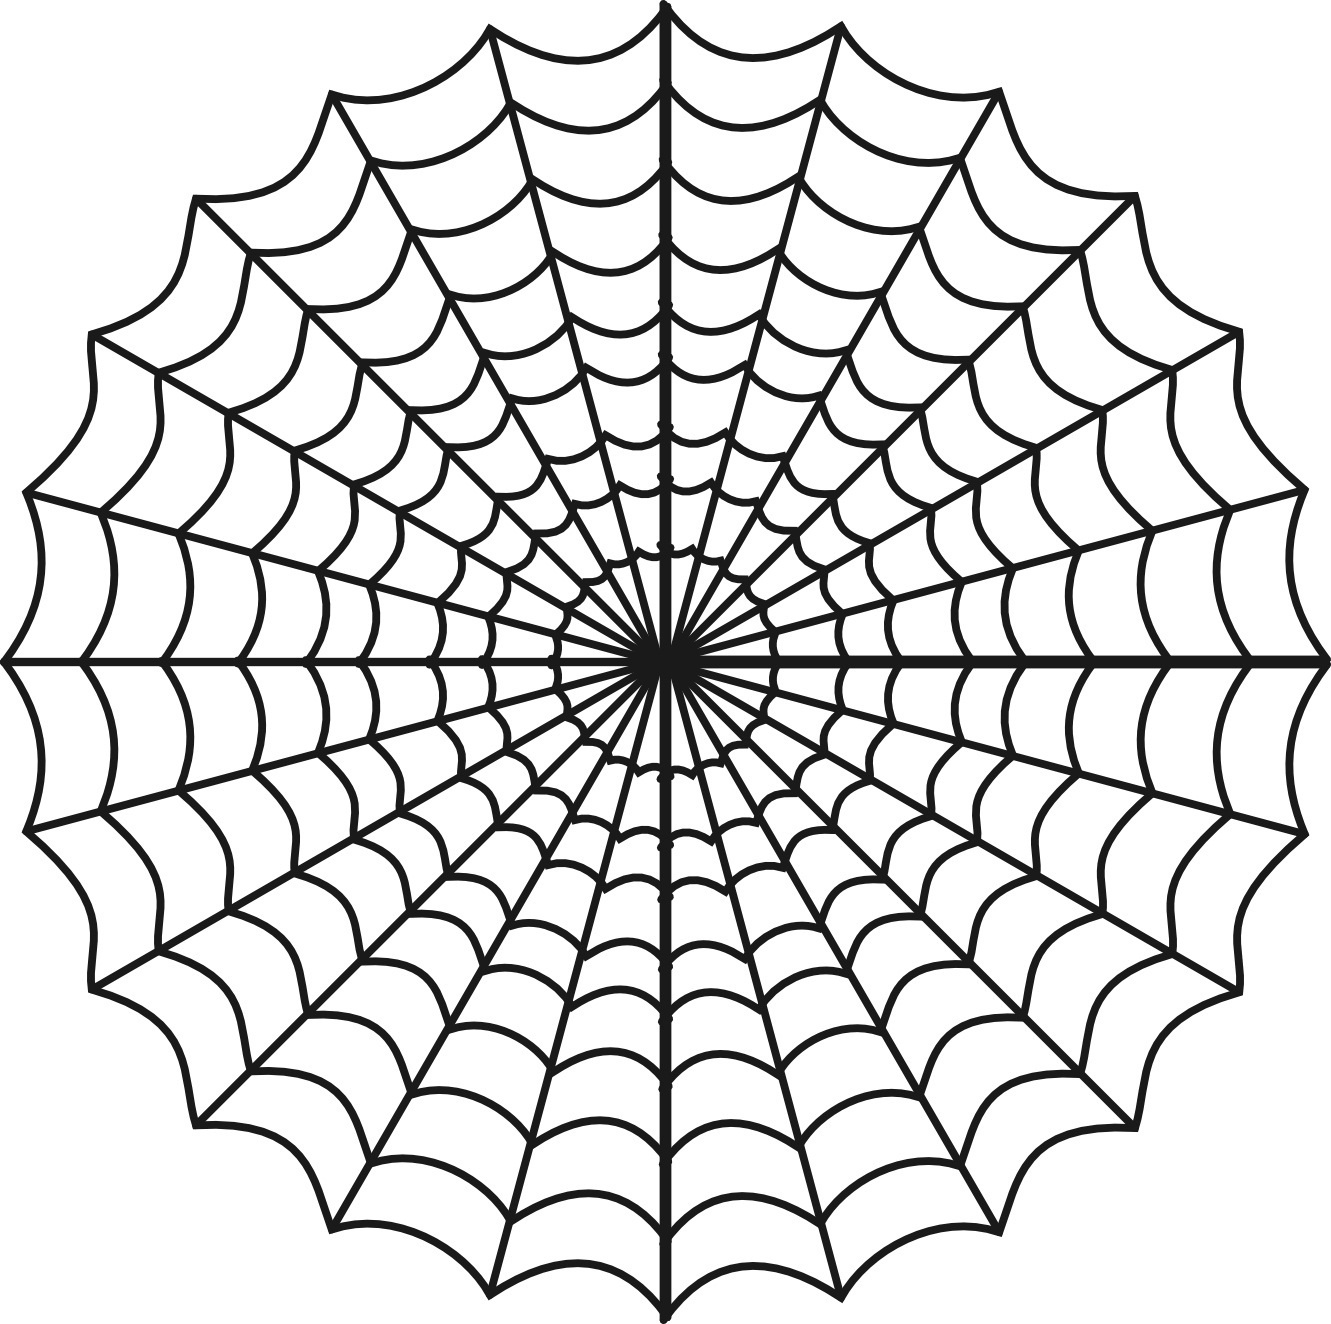 Printable Spider Web Stencil Coolest Free Printables. This Stencil